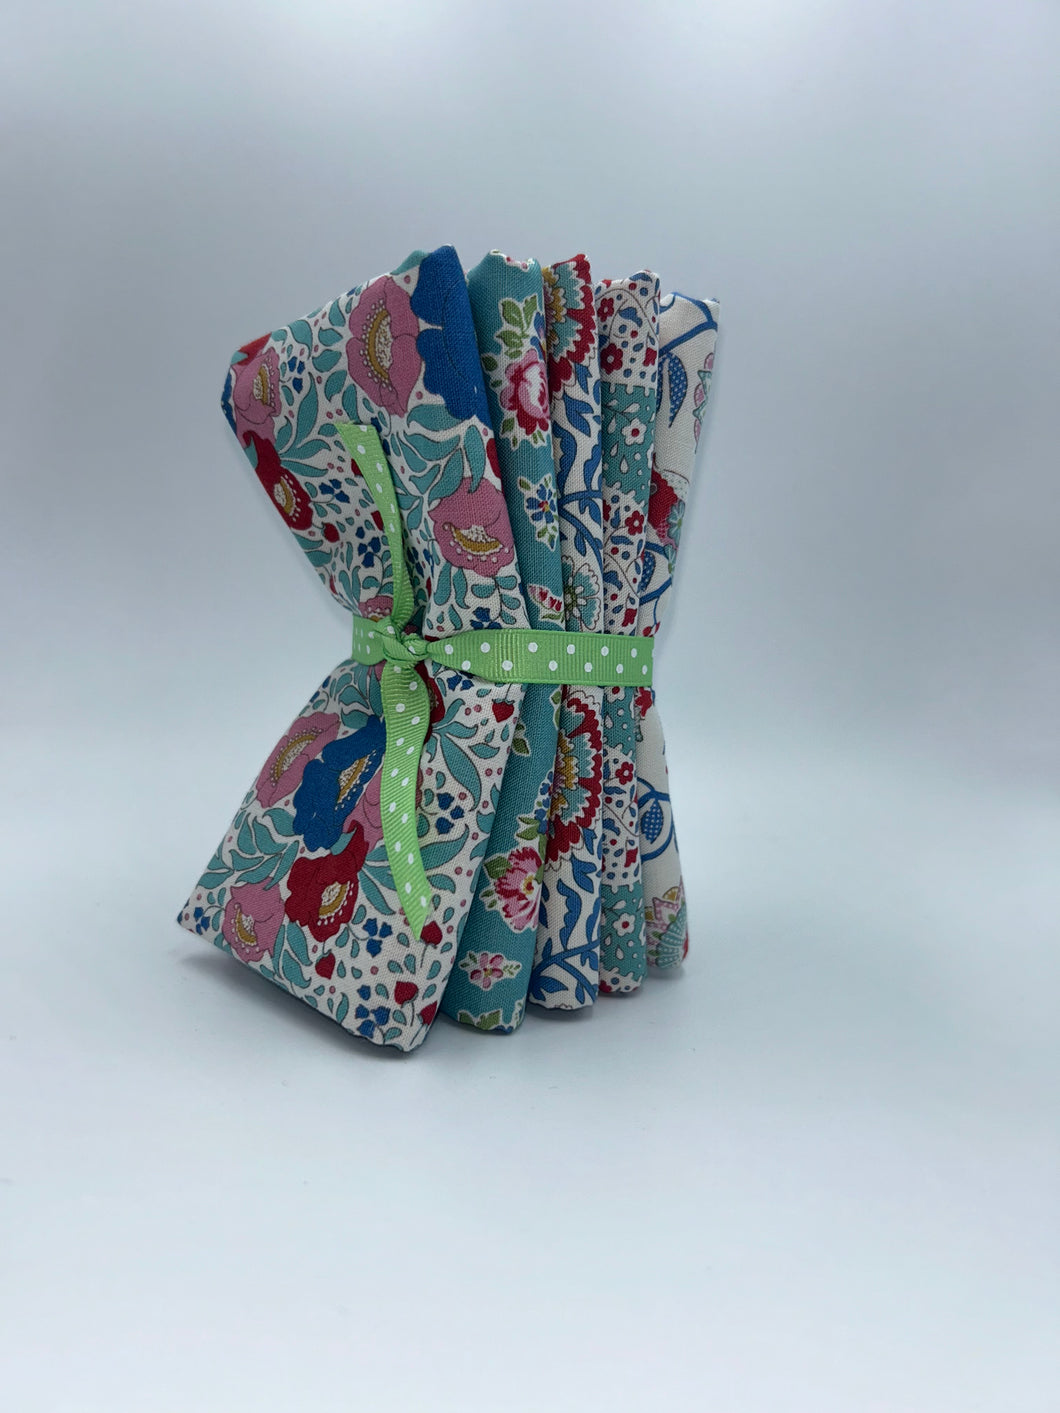 Bundle of 5 Fat Quarters of Jubilee by Tilda Fabrics - In Teal